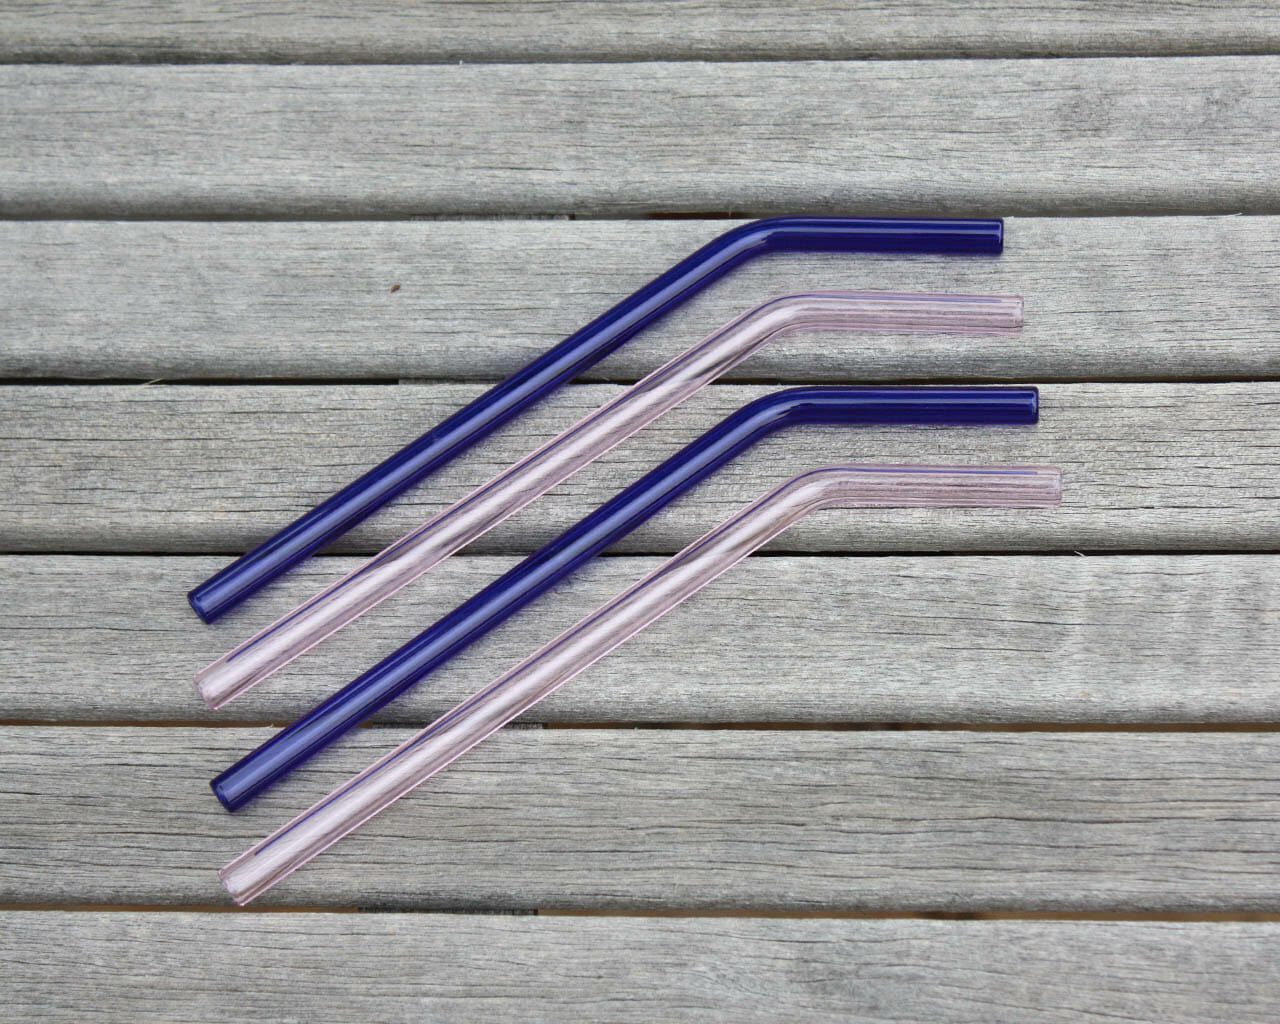 Reusable bent Glass Straws